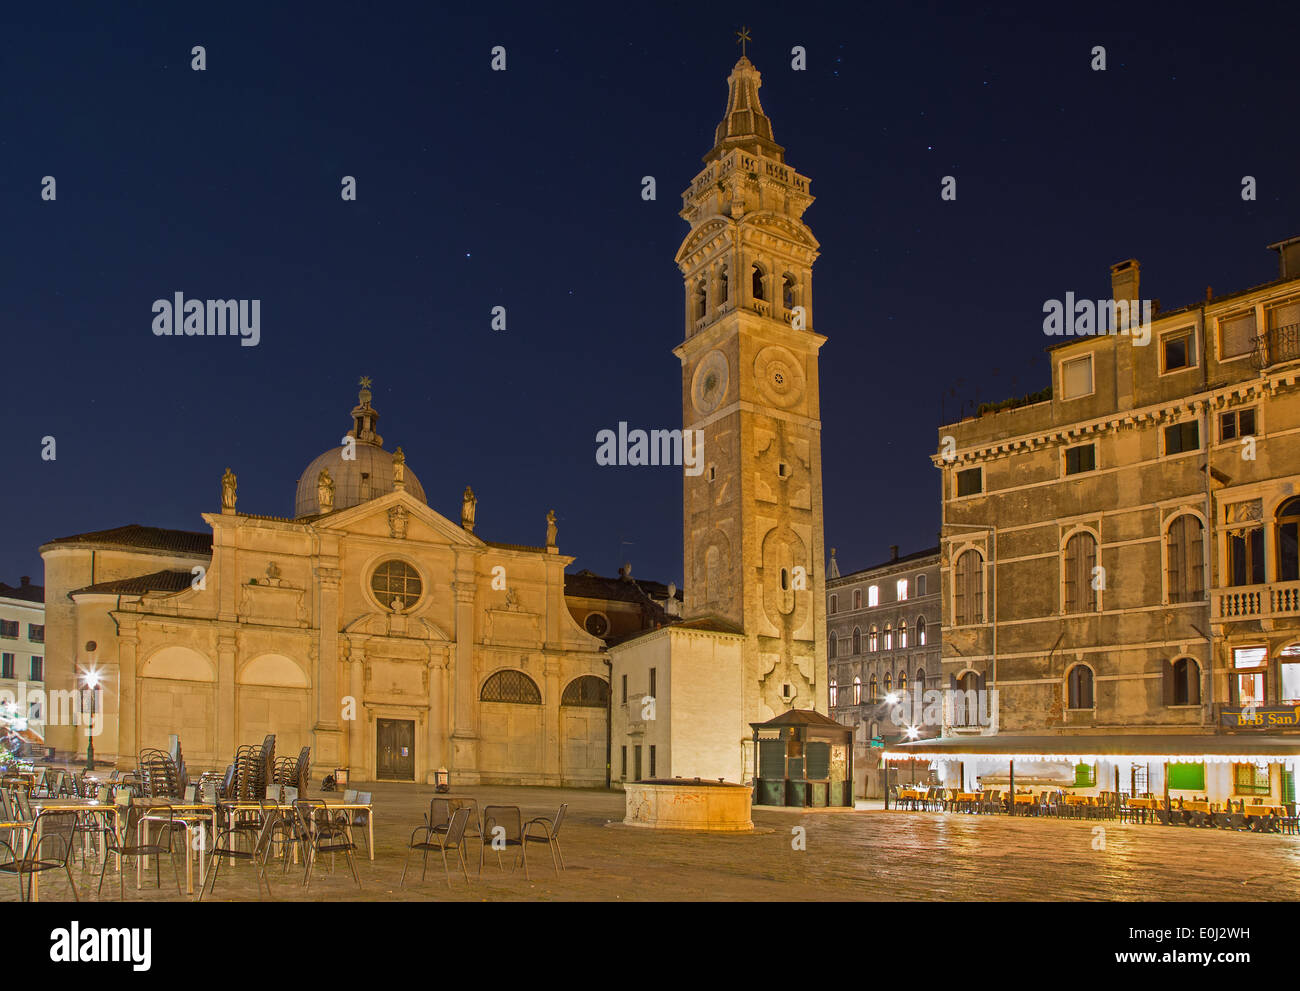 VENICE, ITALY - MARCH 13, 2014:Chiesa di Santa Maria Formosa church and square at night Stock Photo